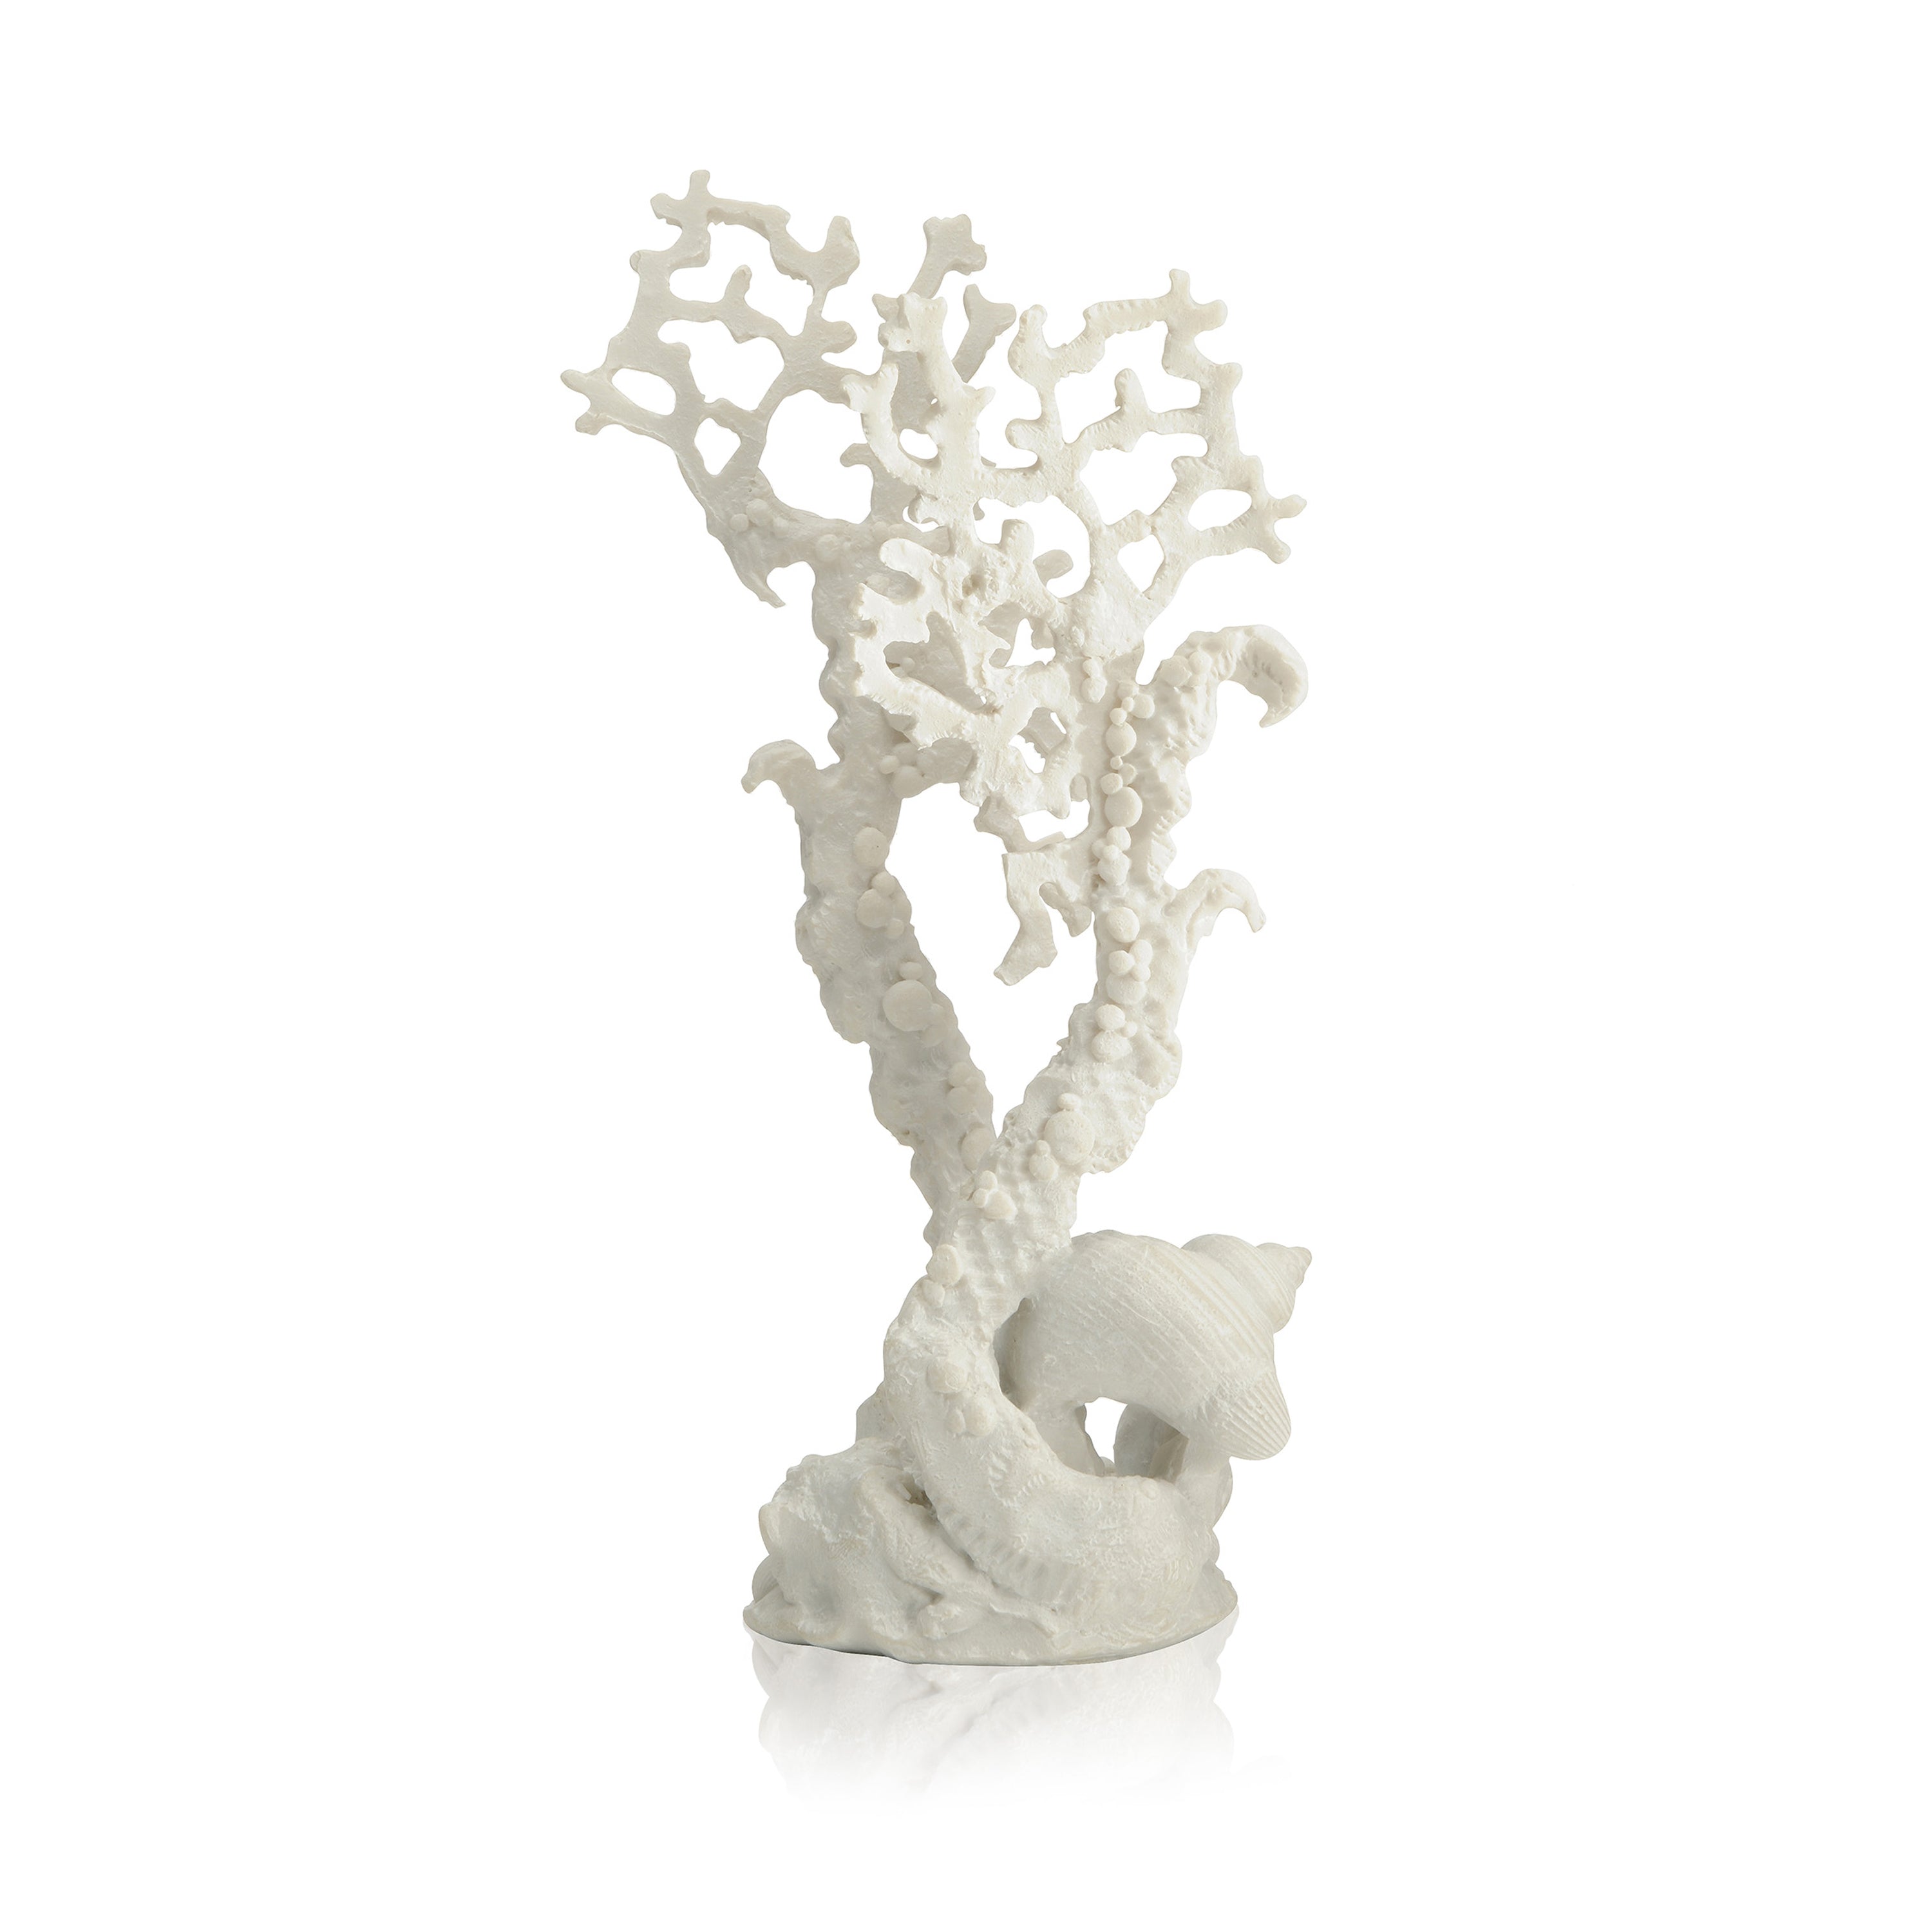 White Fan Coral Sculpture, medium